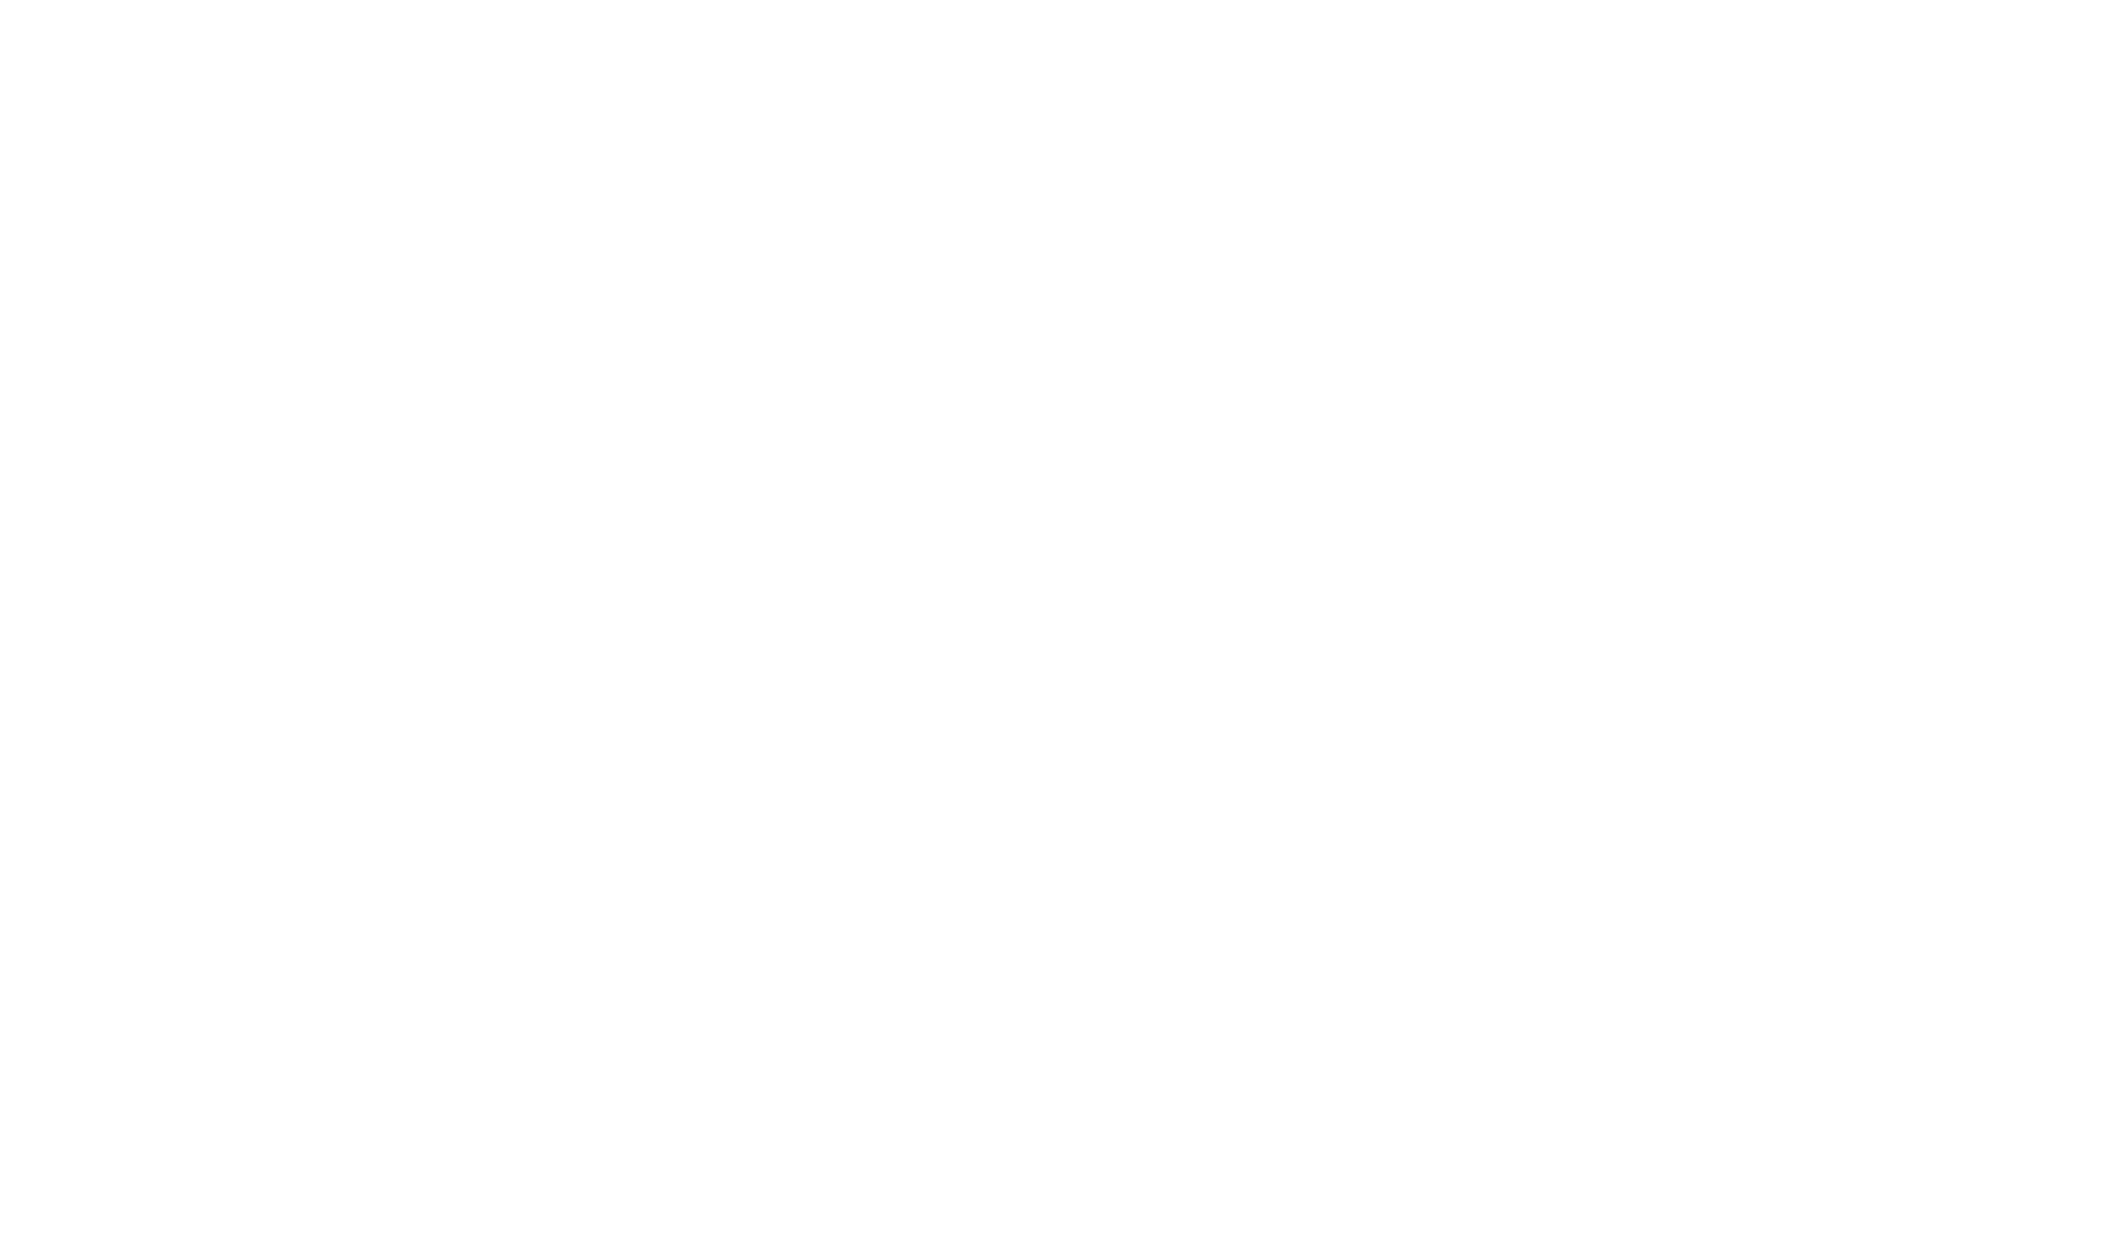 theprintfish is using voxini